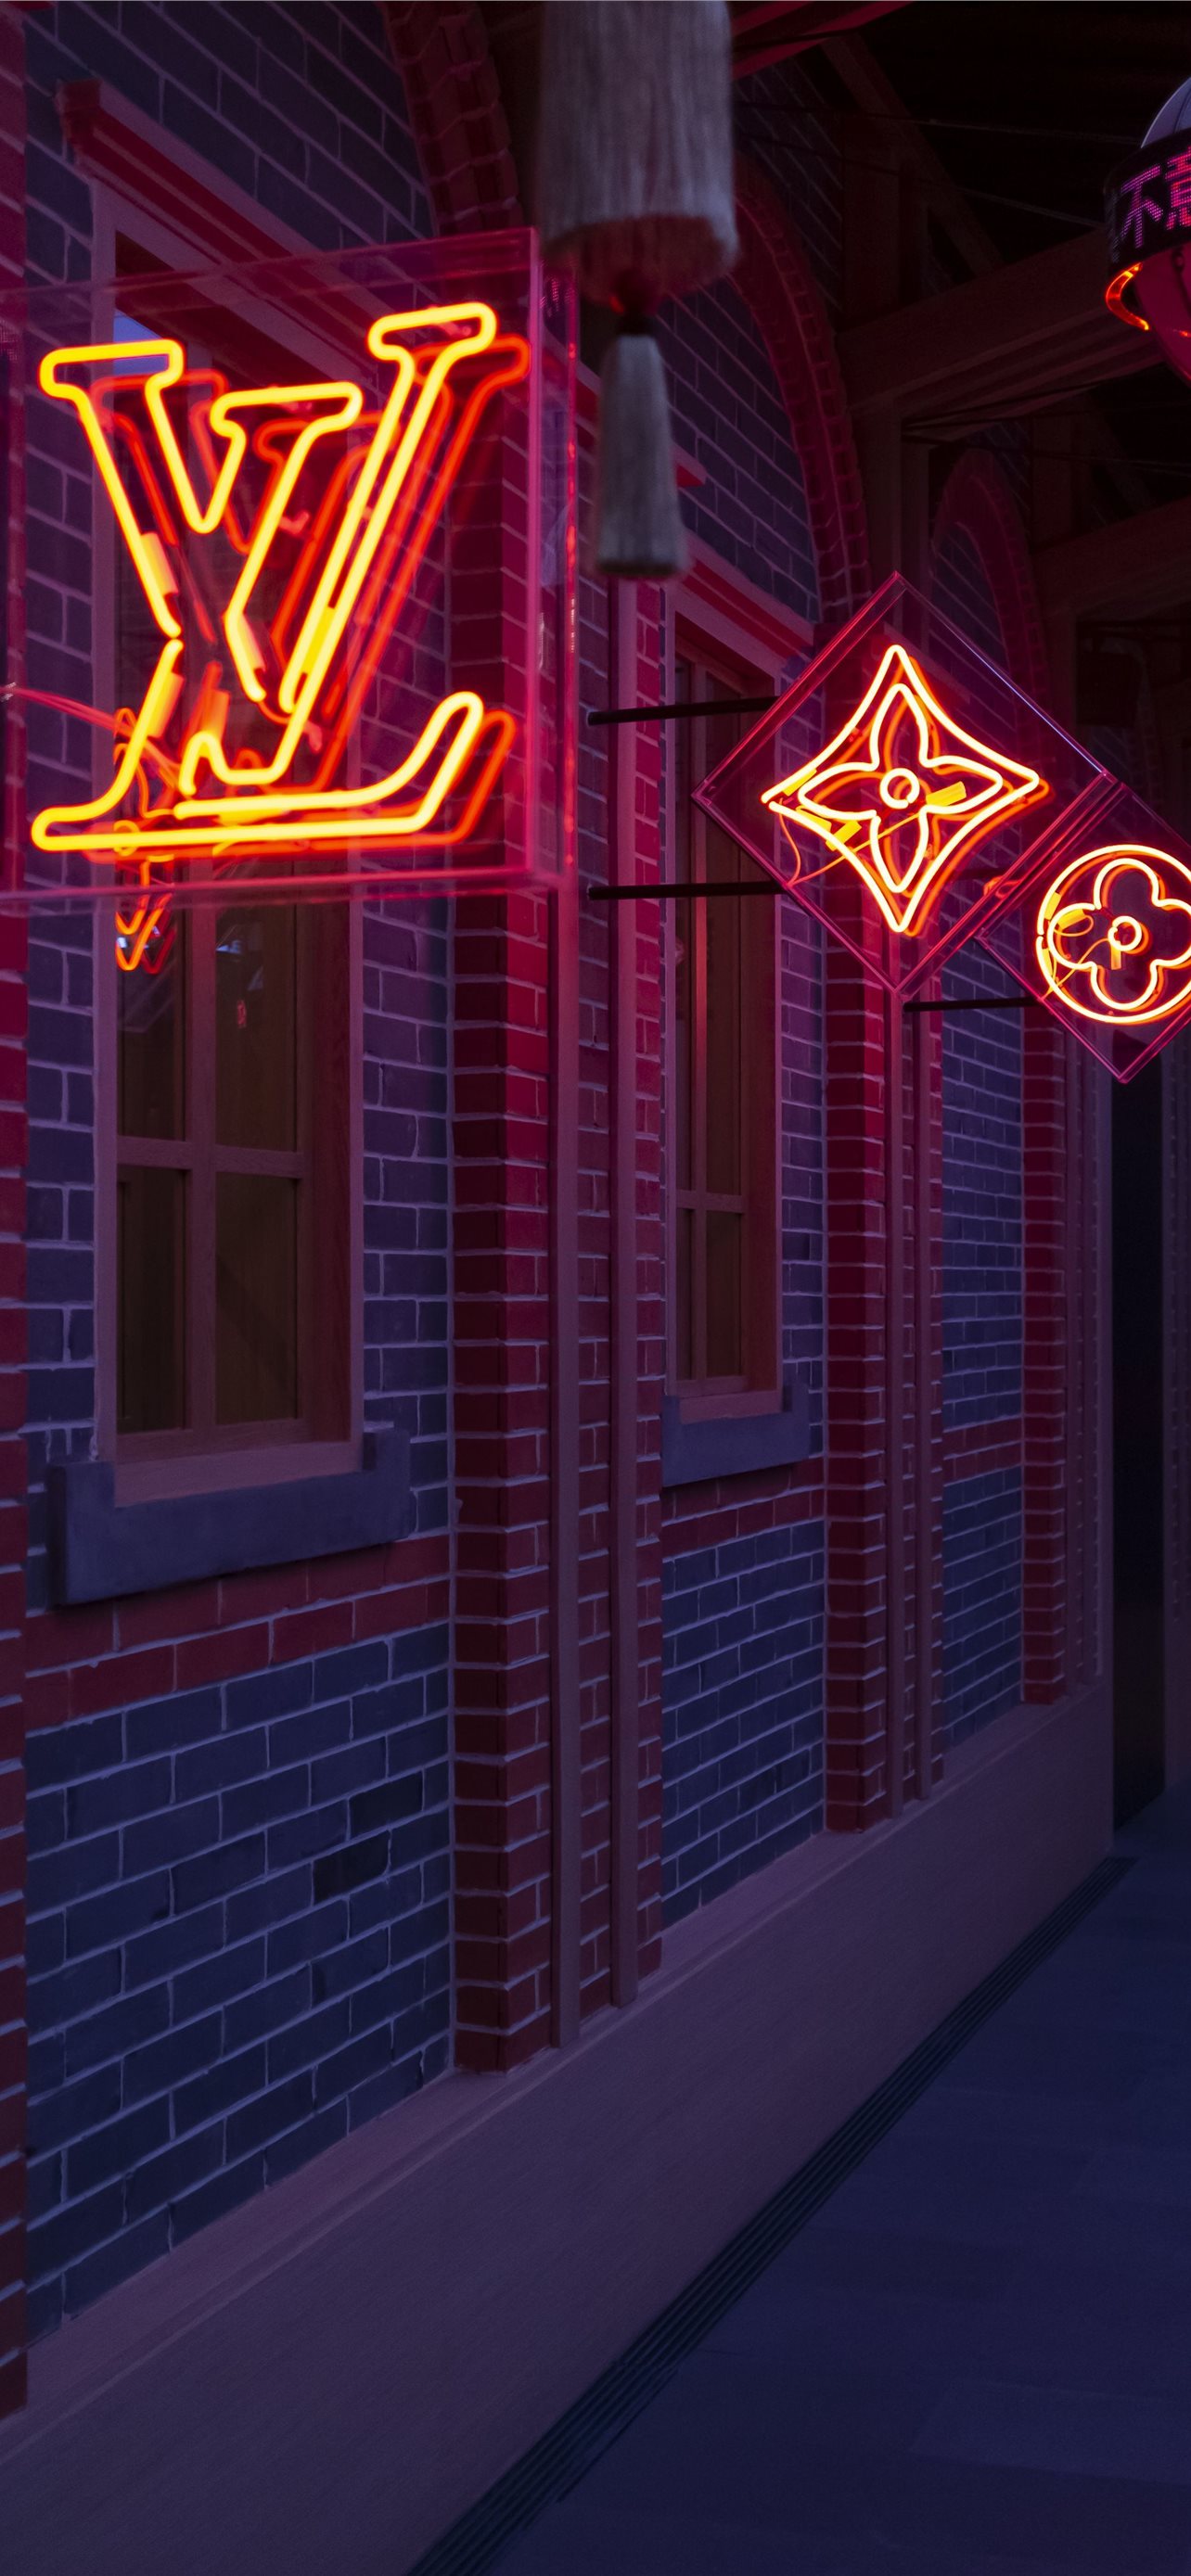 Neon Louis Vuitton on Dog iPhone wallpaper 